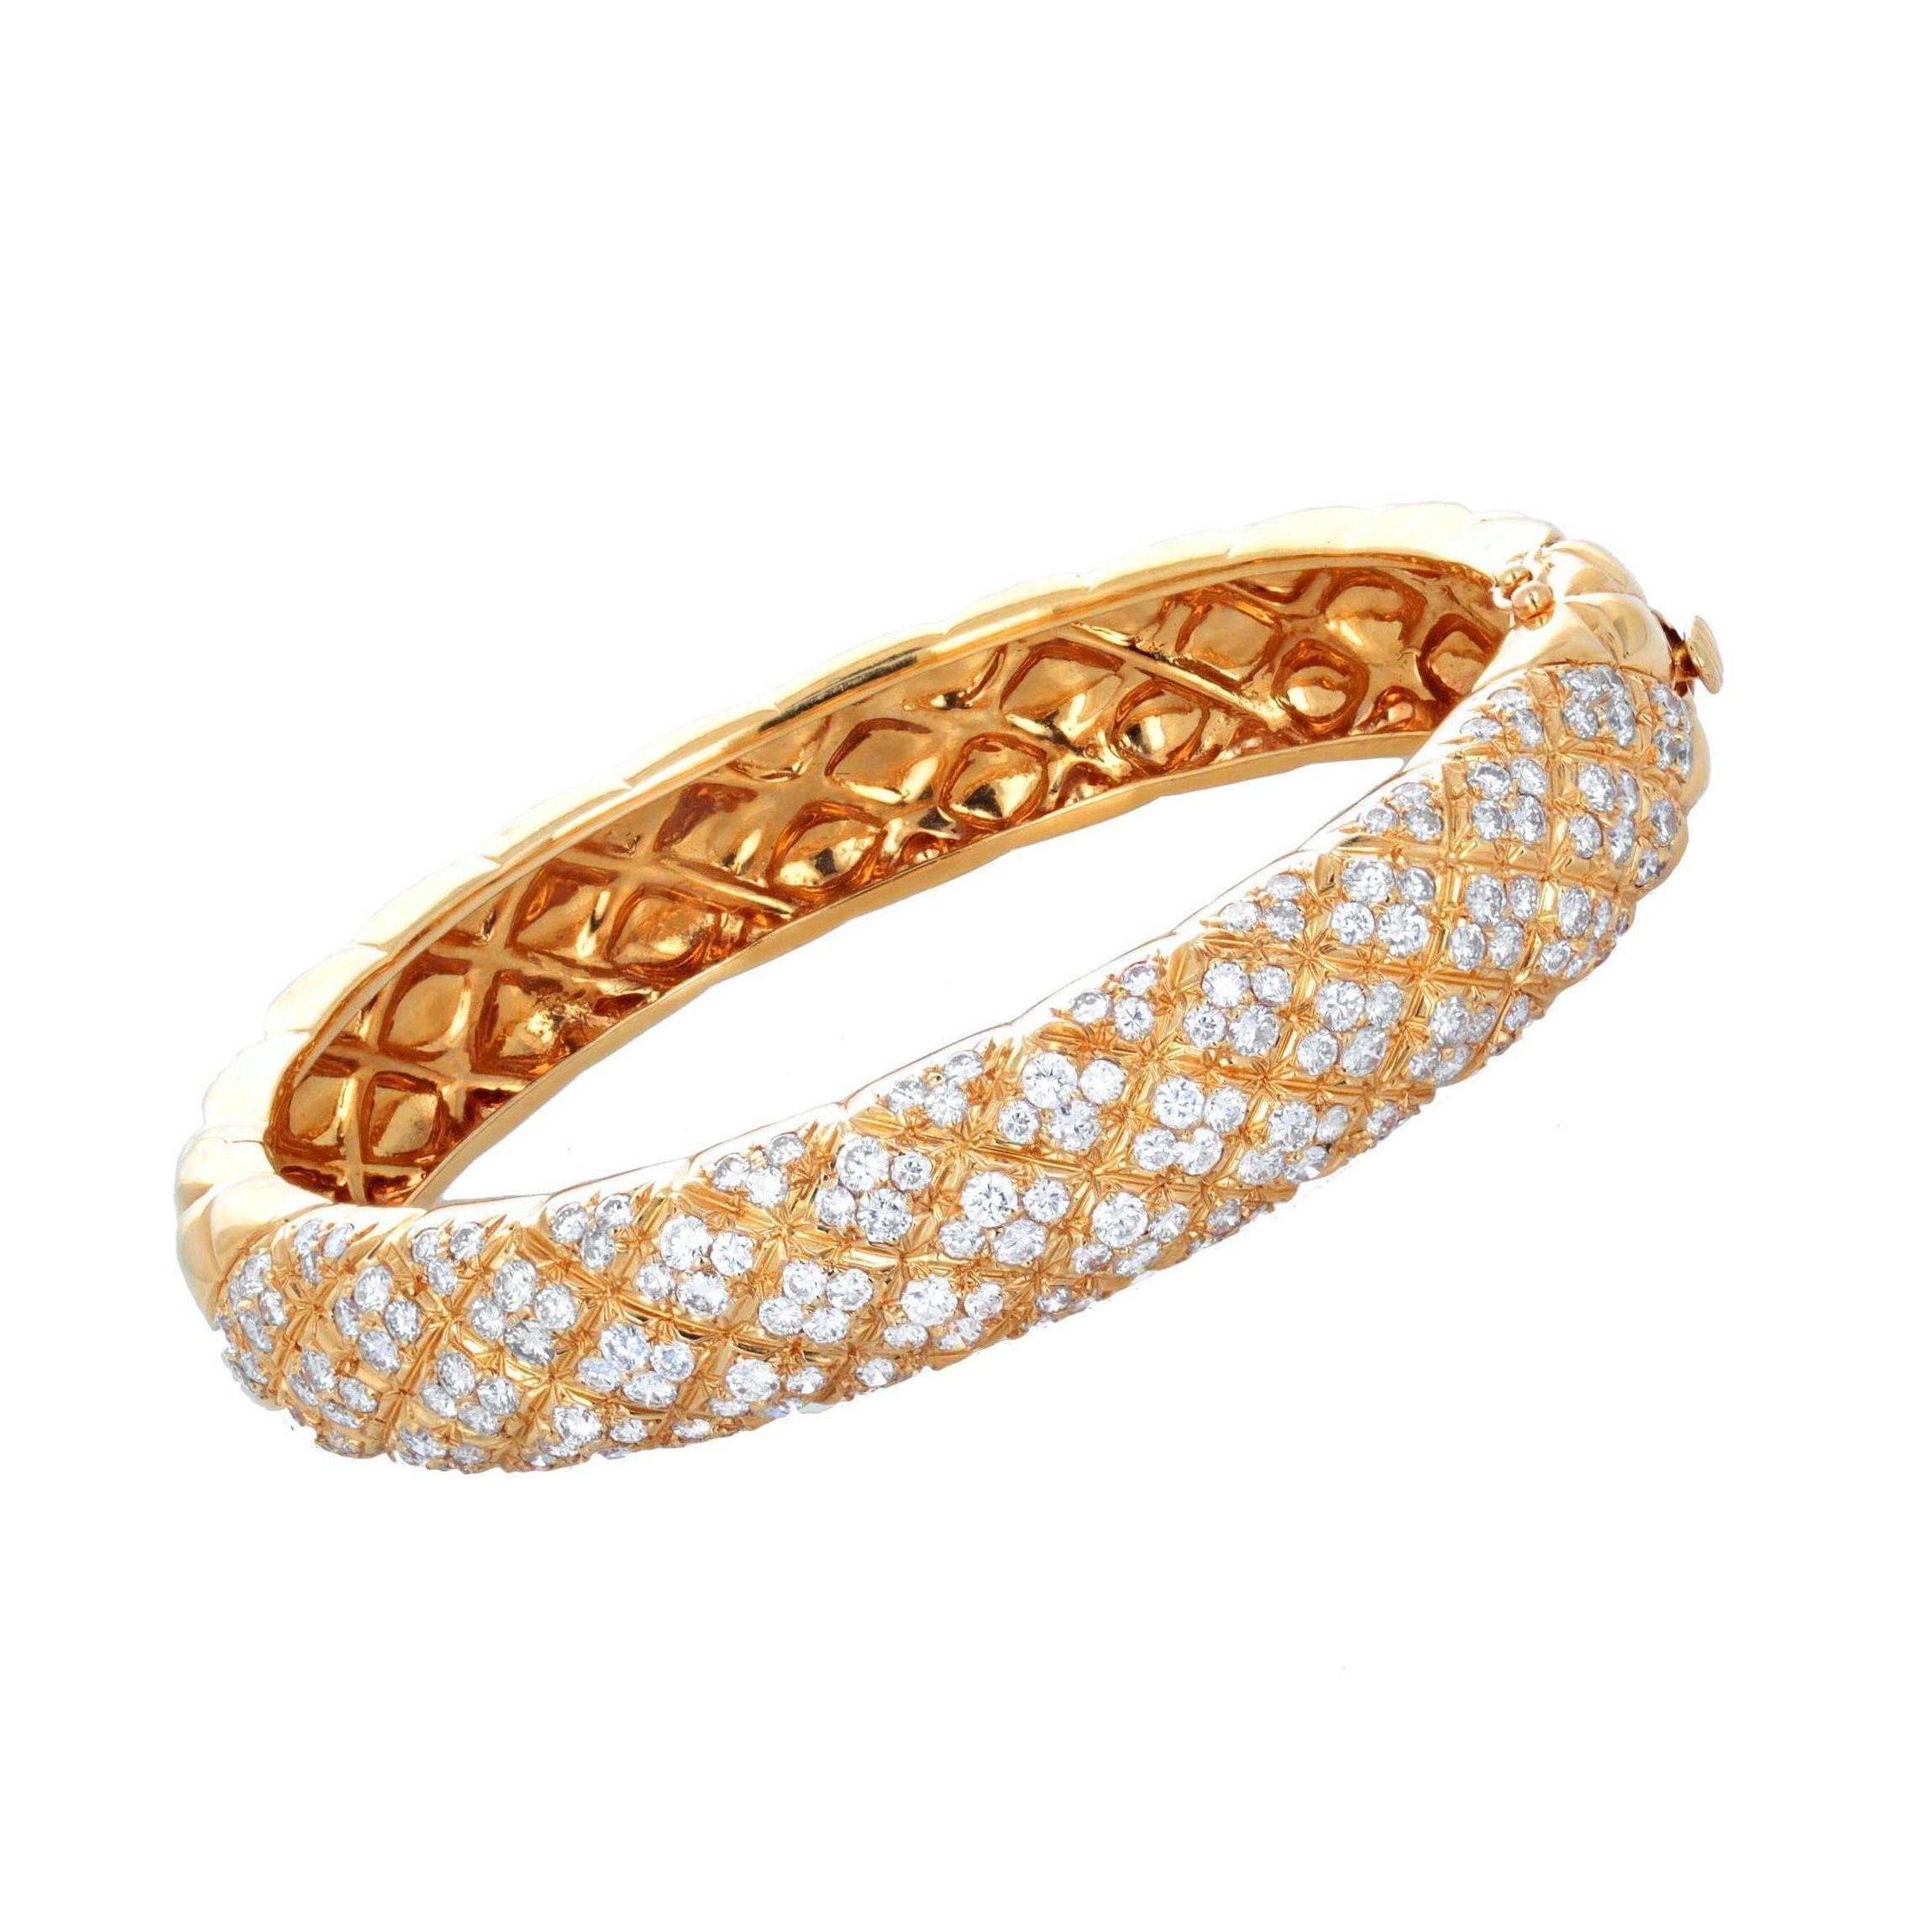 Van Cleef & Arpels Diamond and Gold Bangle Bracelet, French